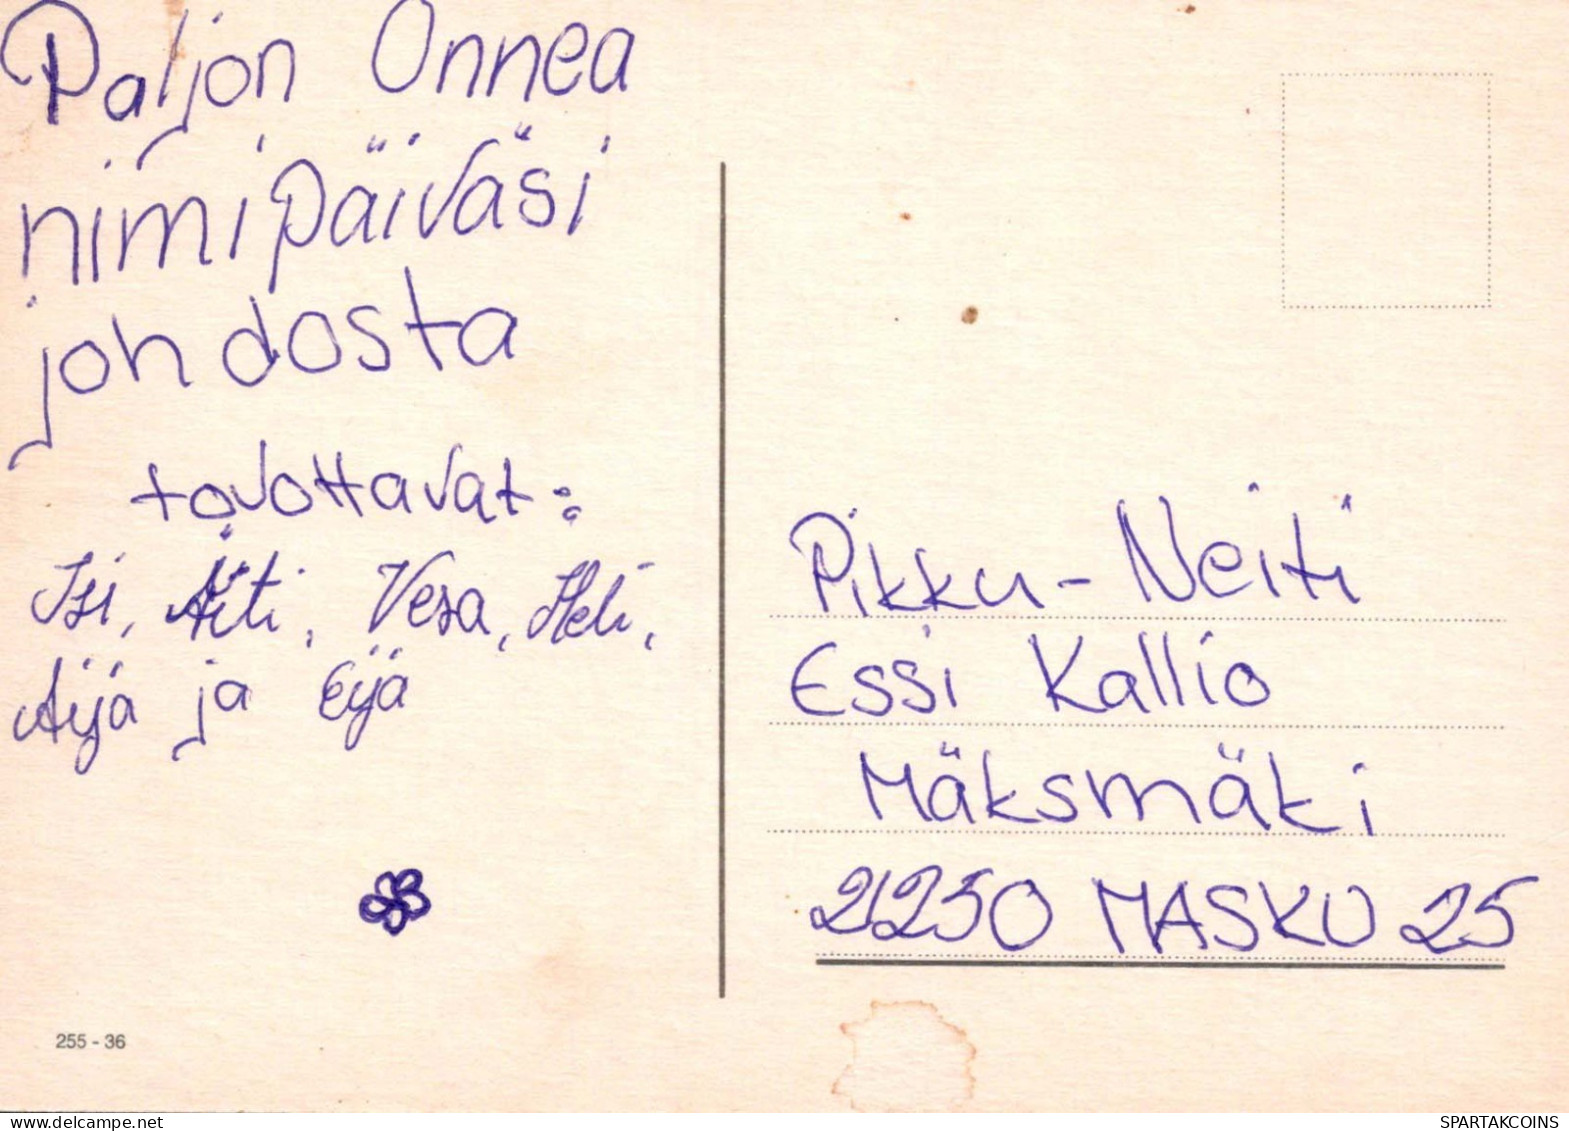 FIORI Vintage Cartolina CPSM #PAS593.IT - Flowers